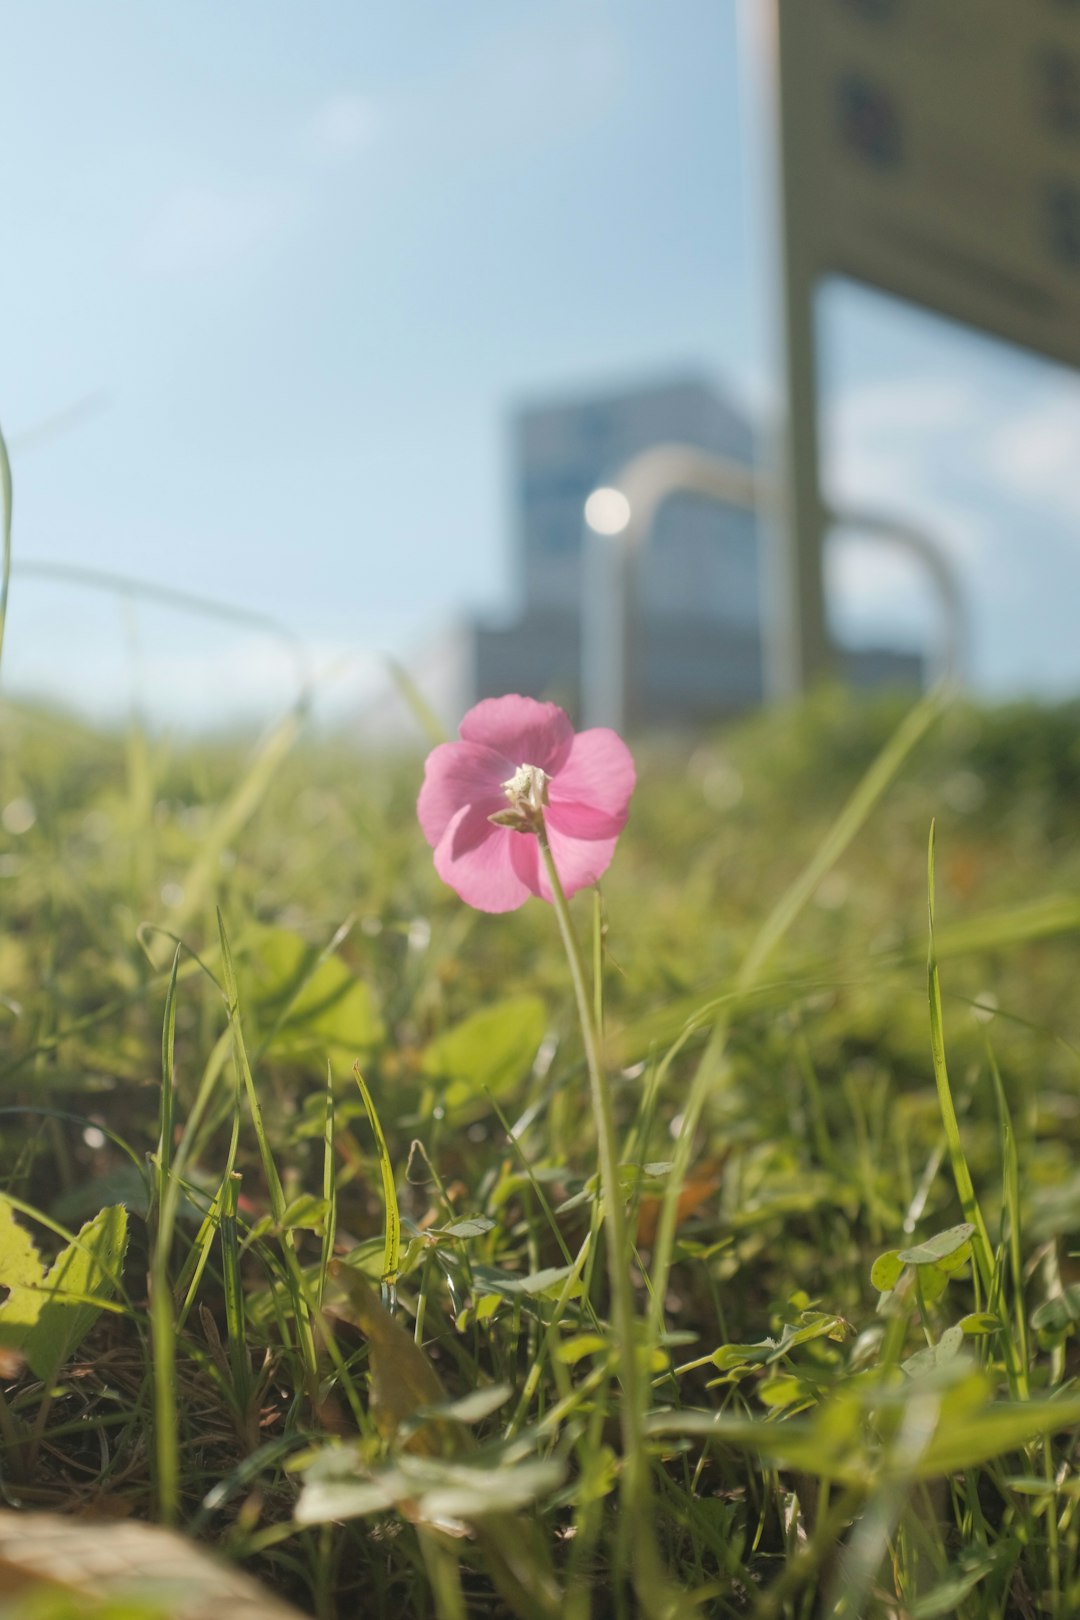 pink flower in green grass during daytime